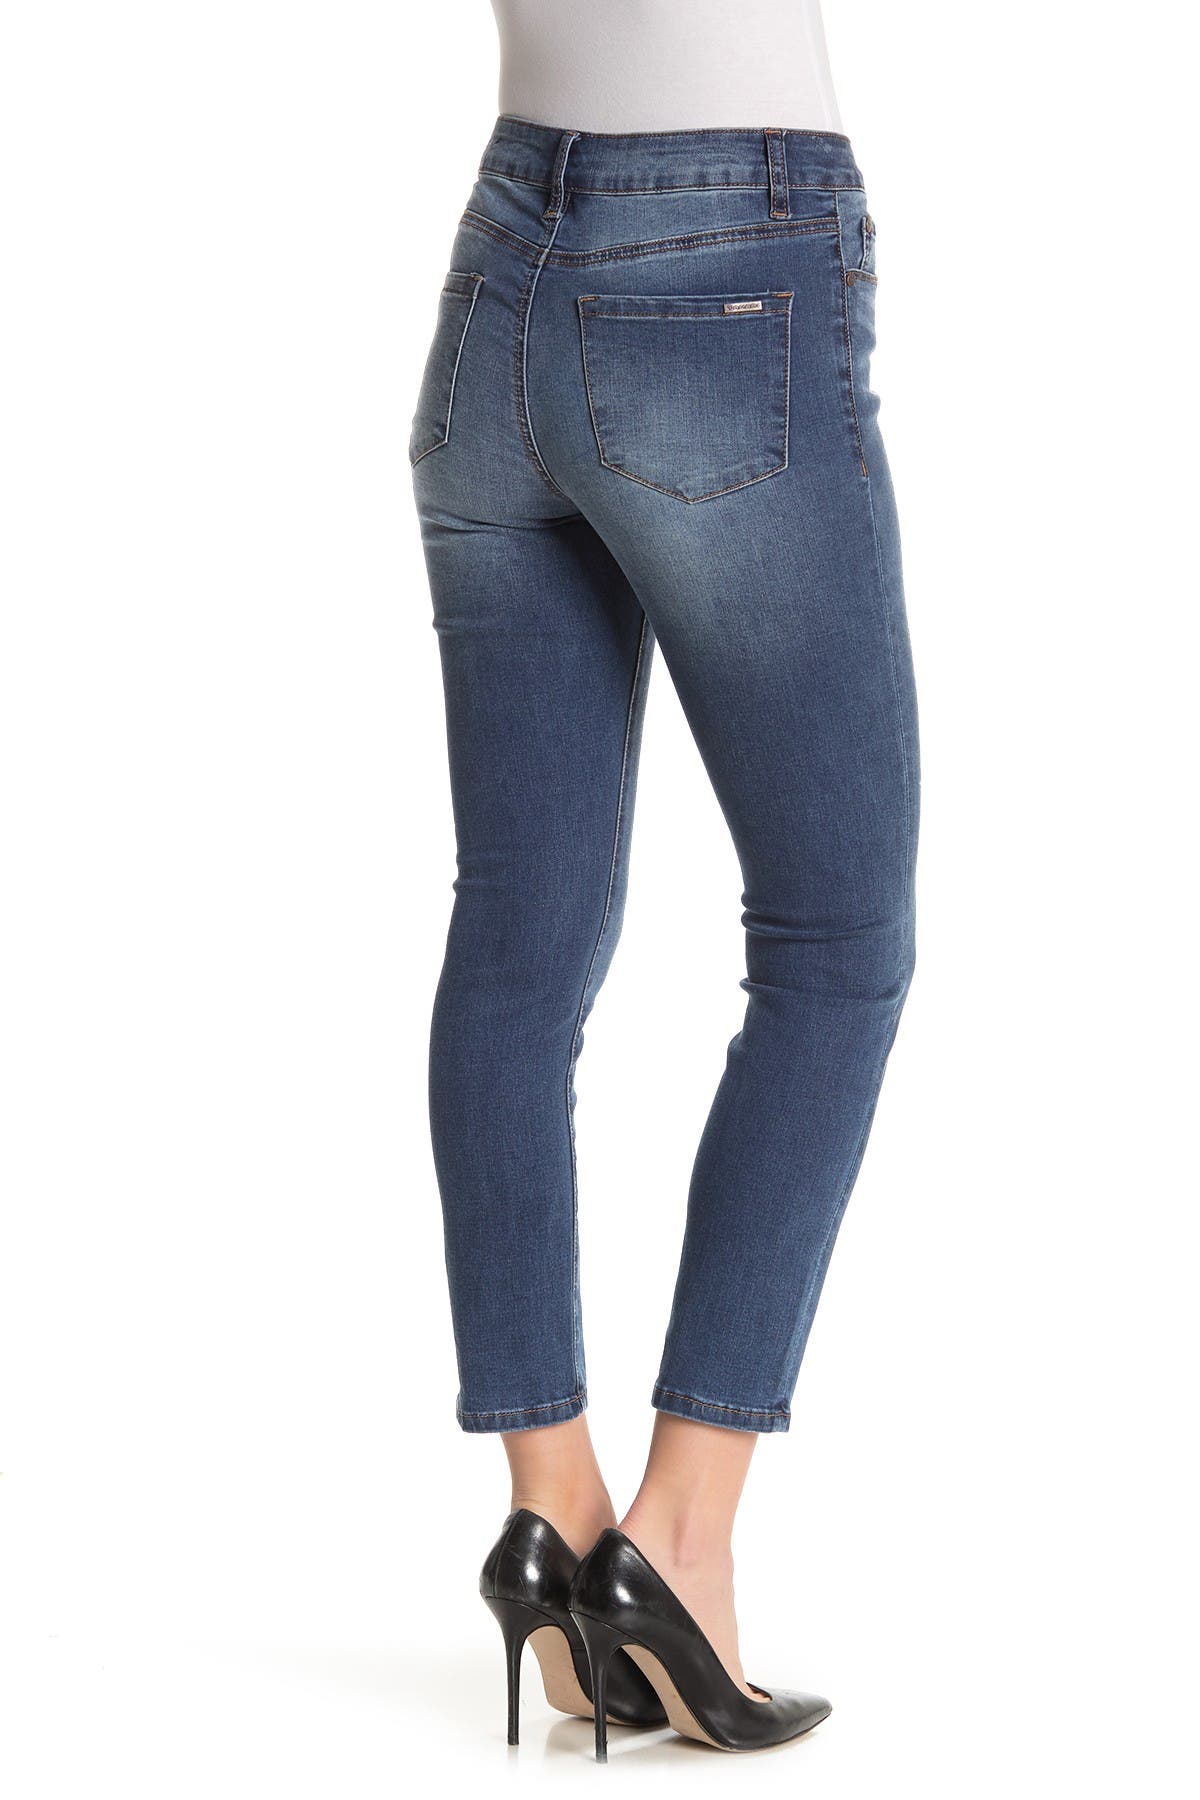 tahari classic skinny jeans